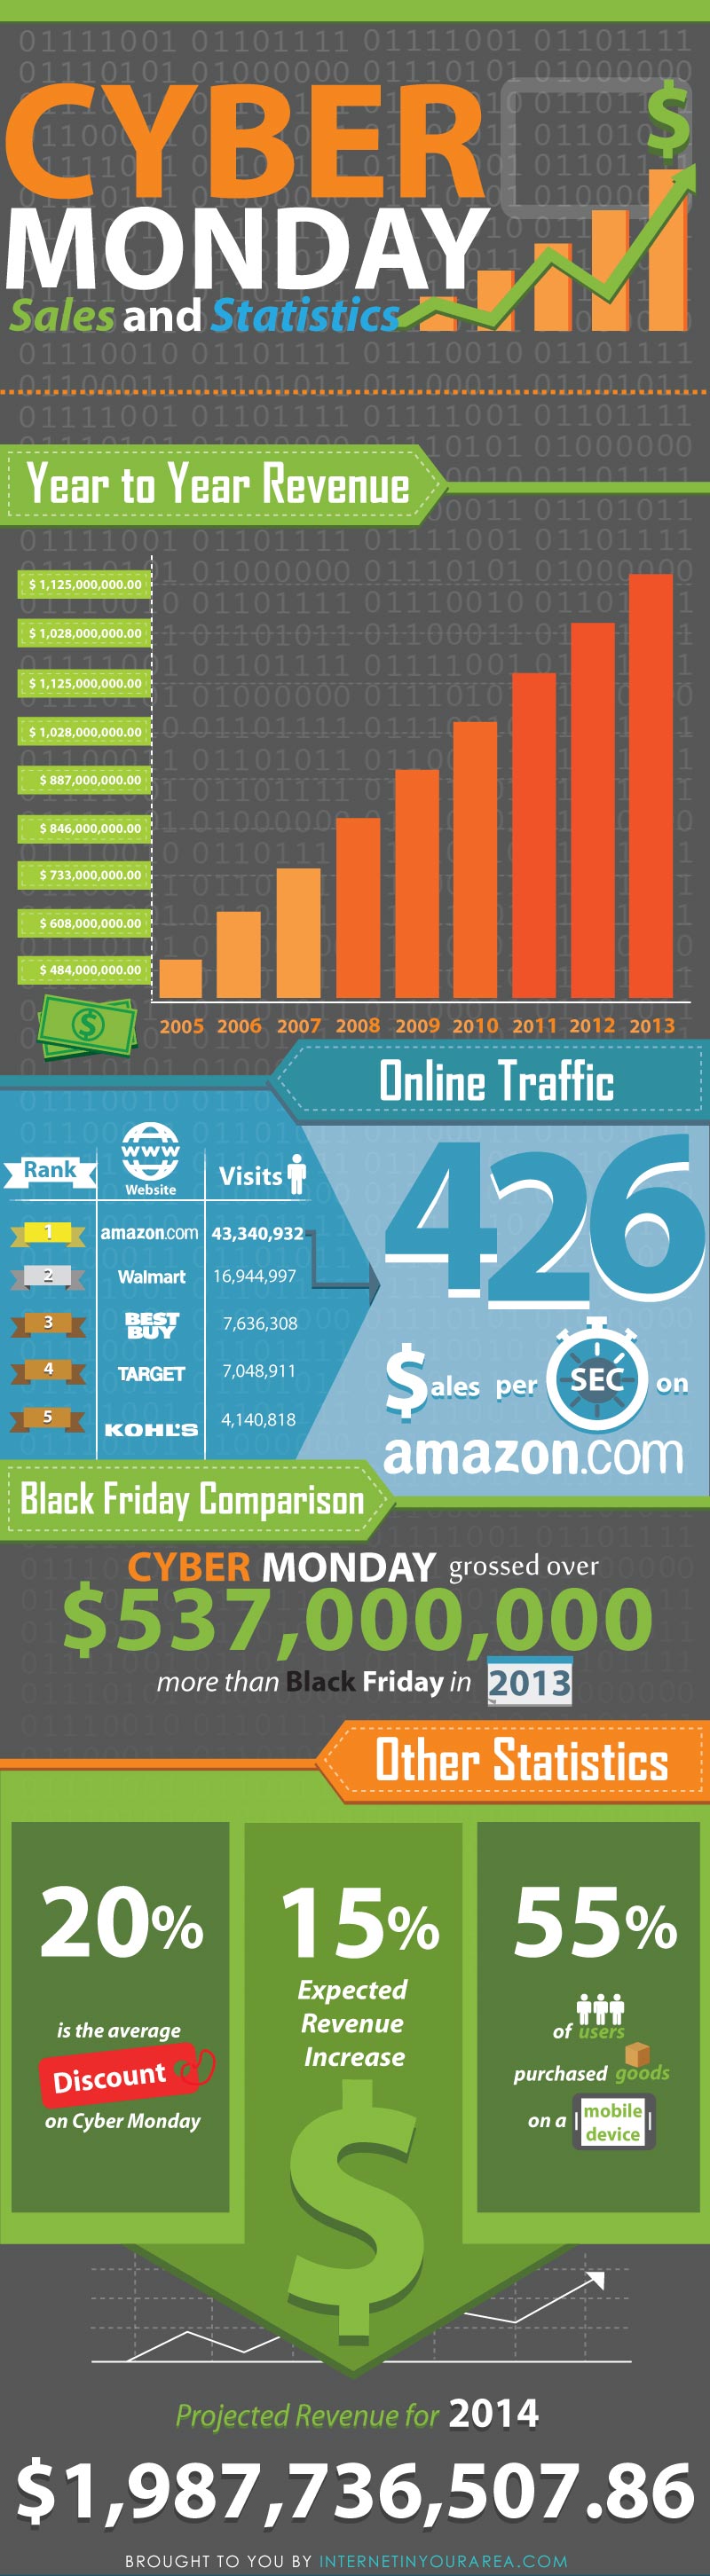 cyber-monday-sales-statistics-infographic